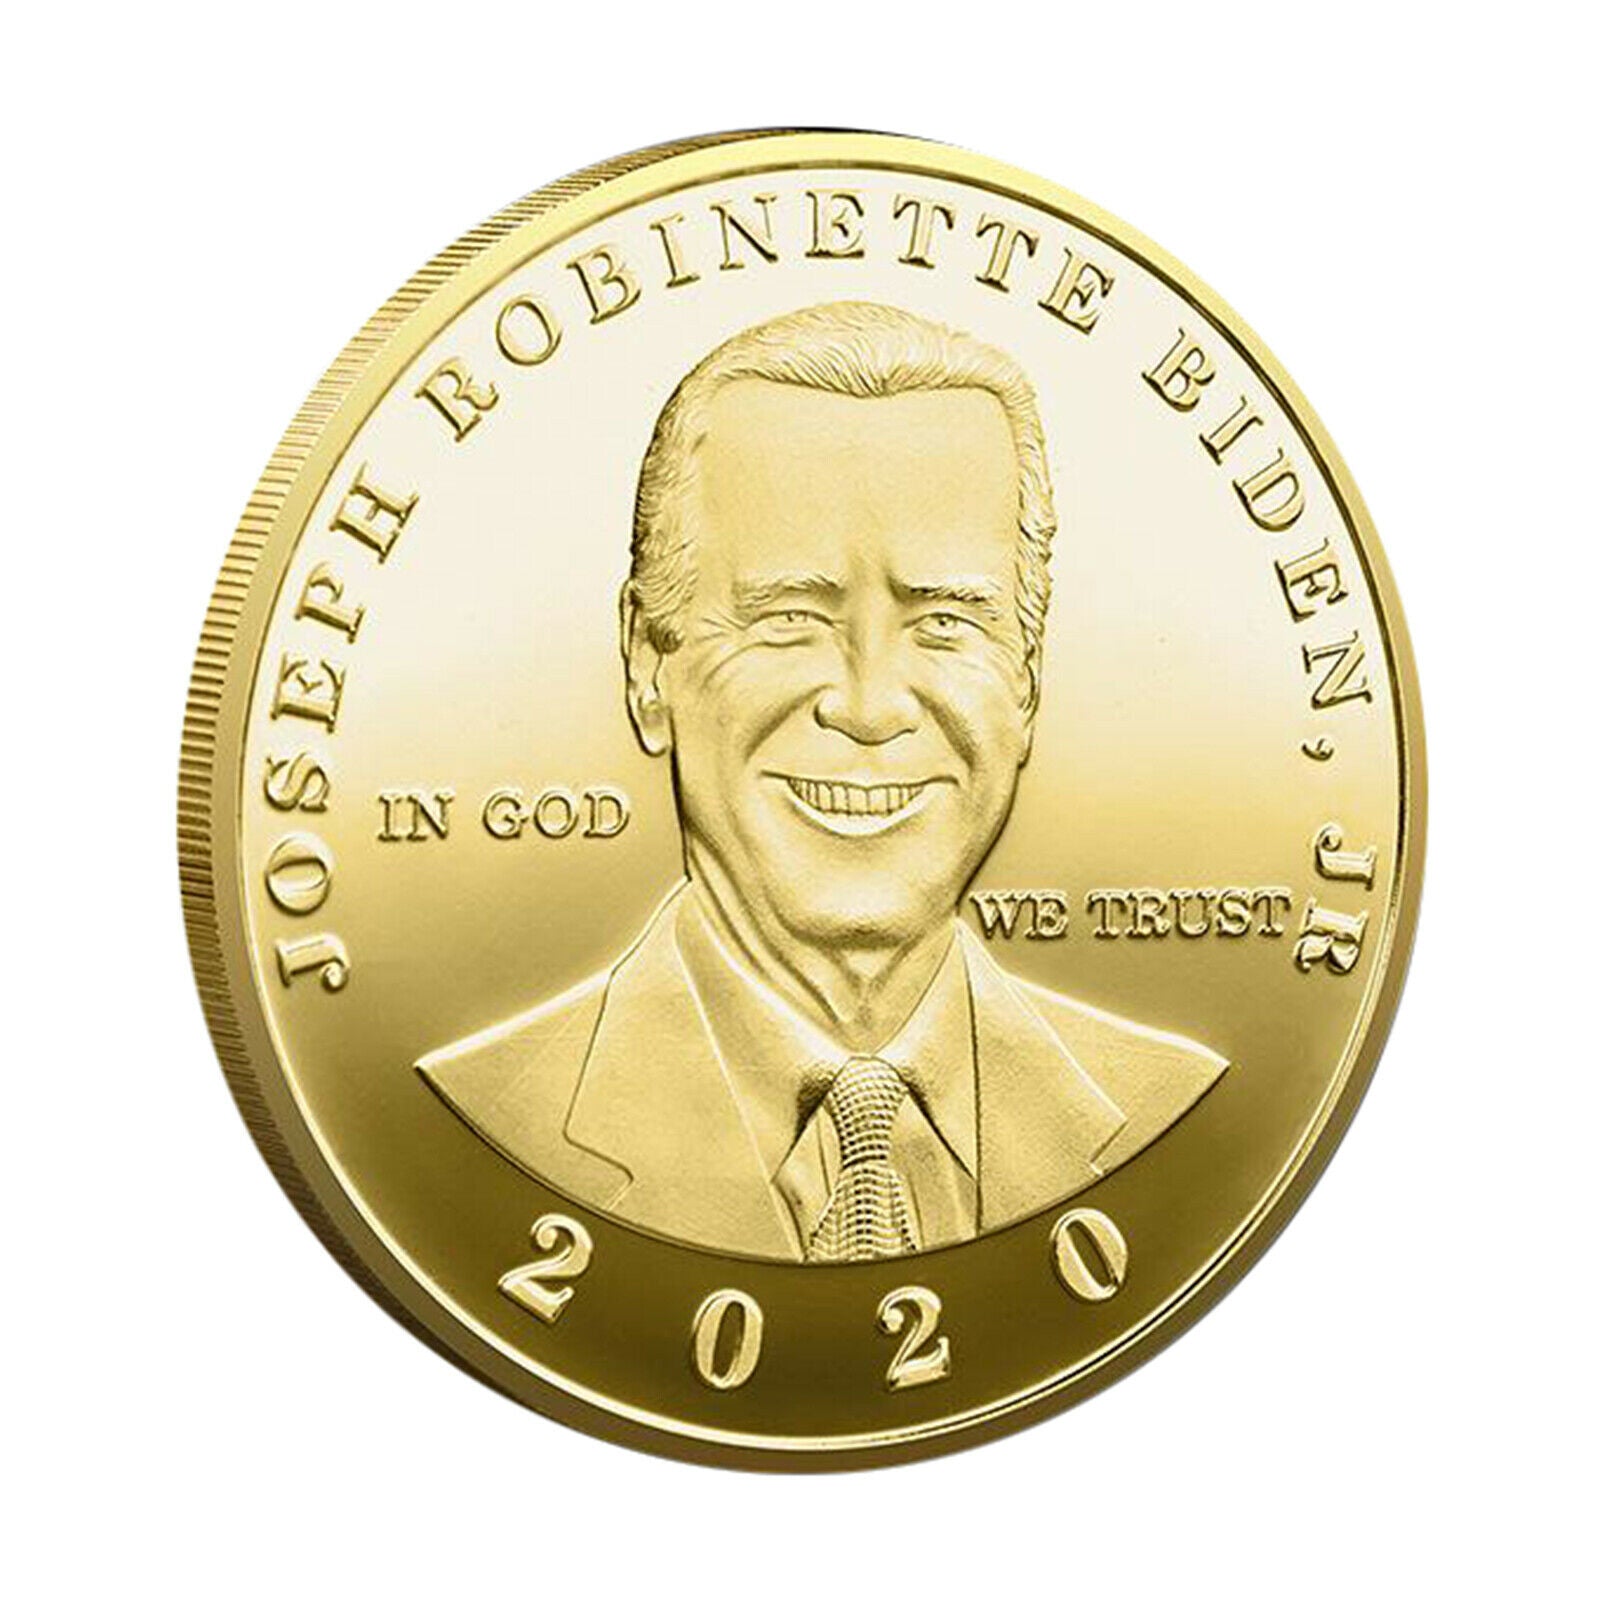 Novelty Joe Biden Challenge Coin Commemorative Inauguration Patriosts 2021